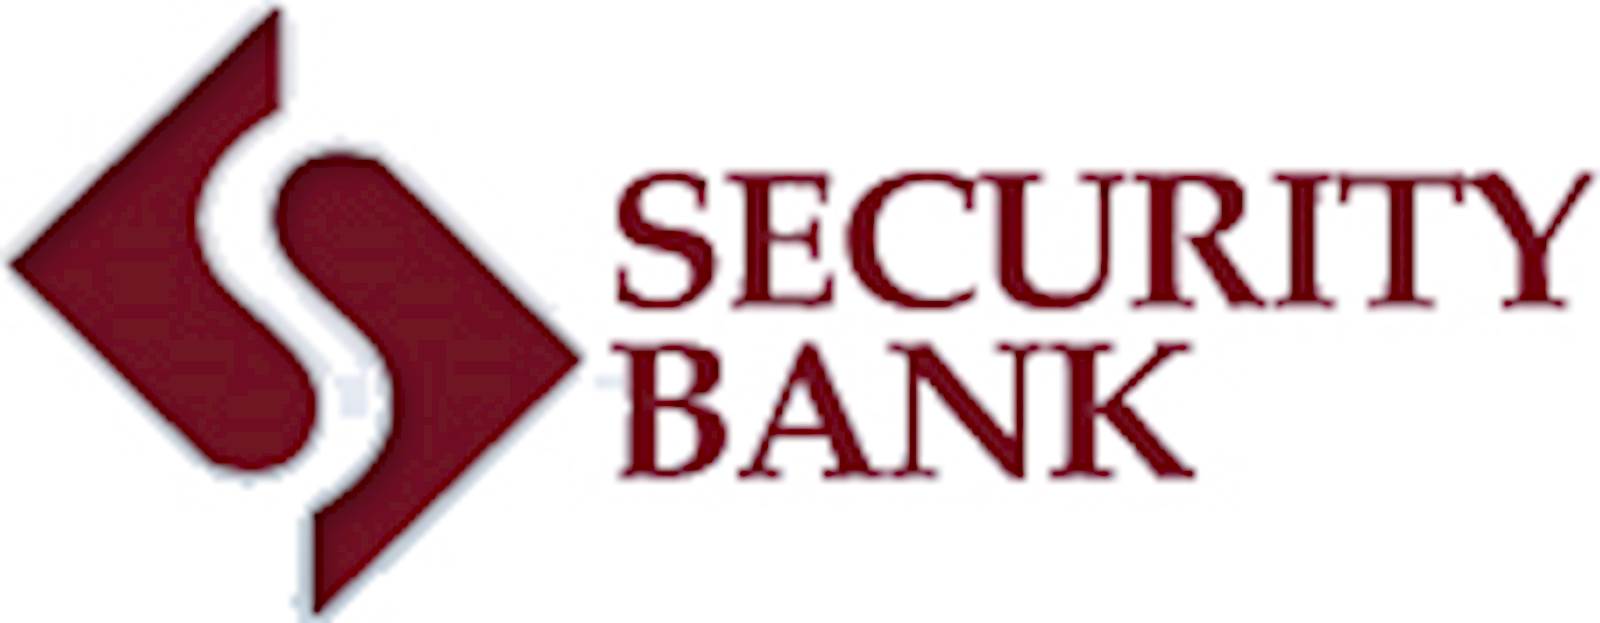 Security Bank.jpg